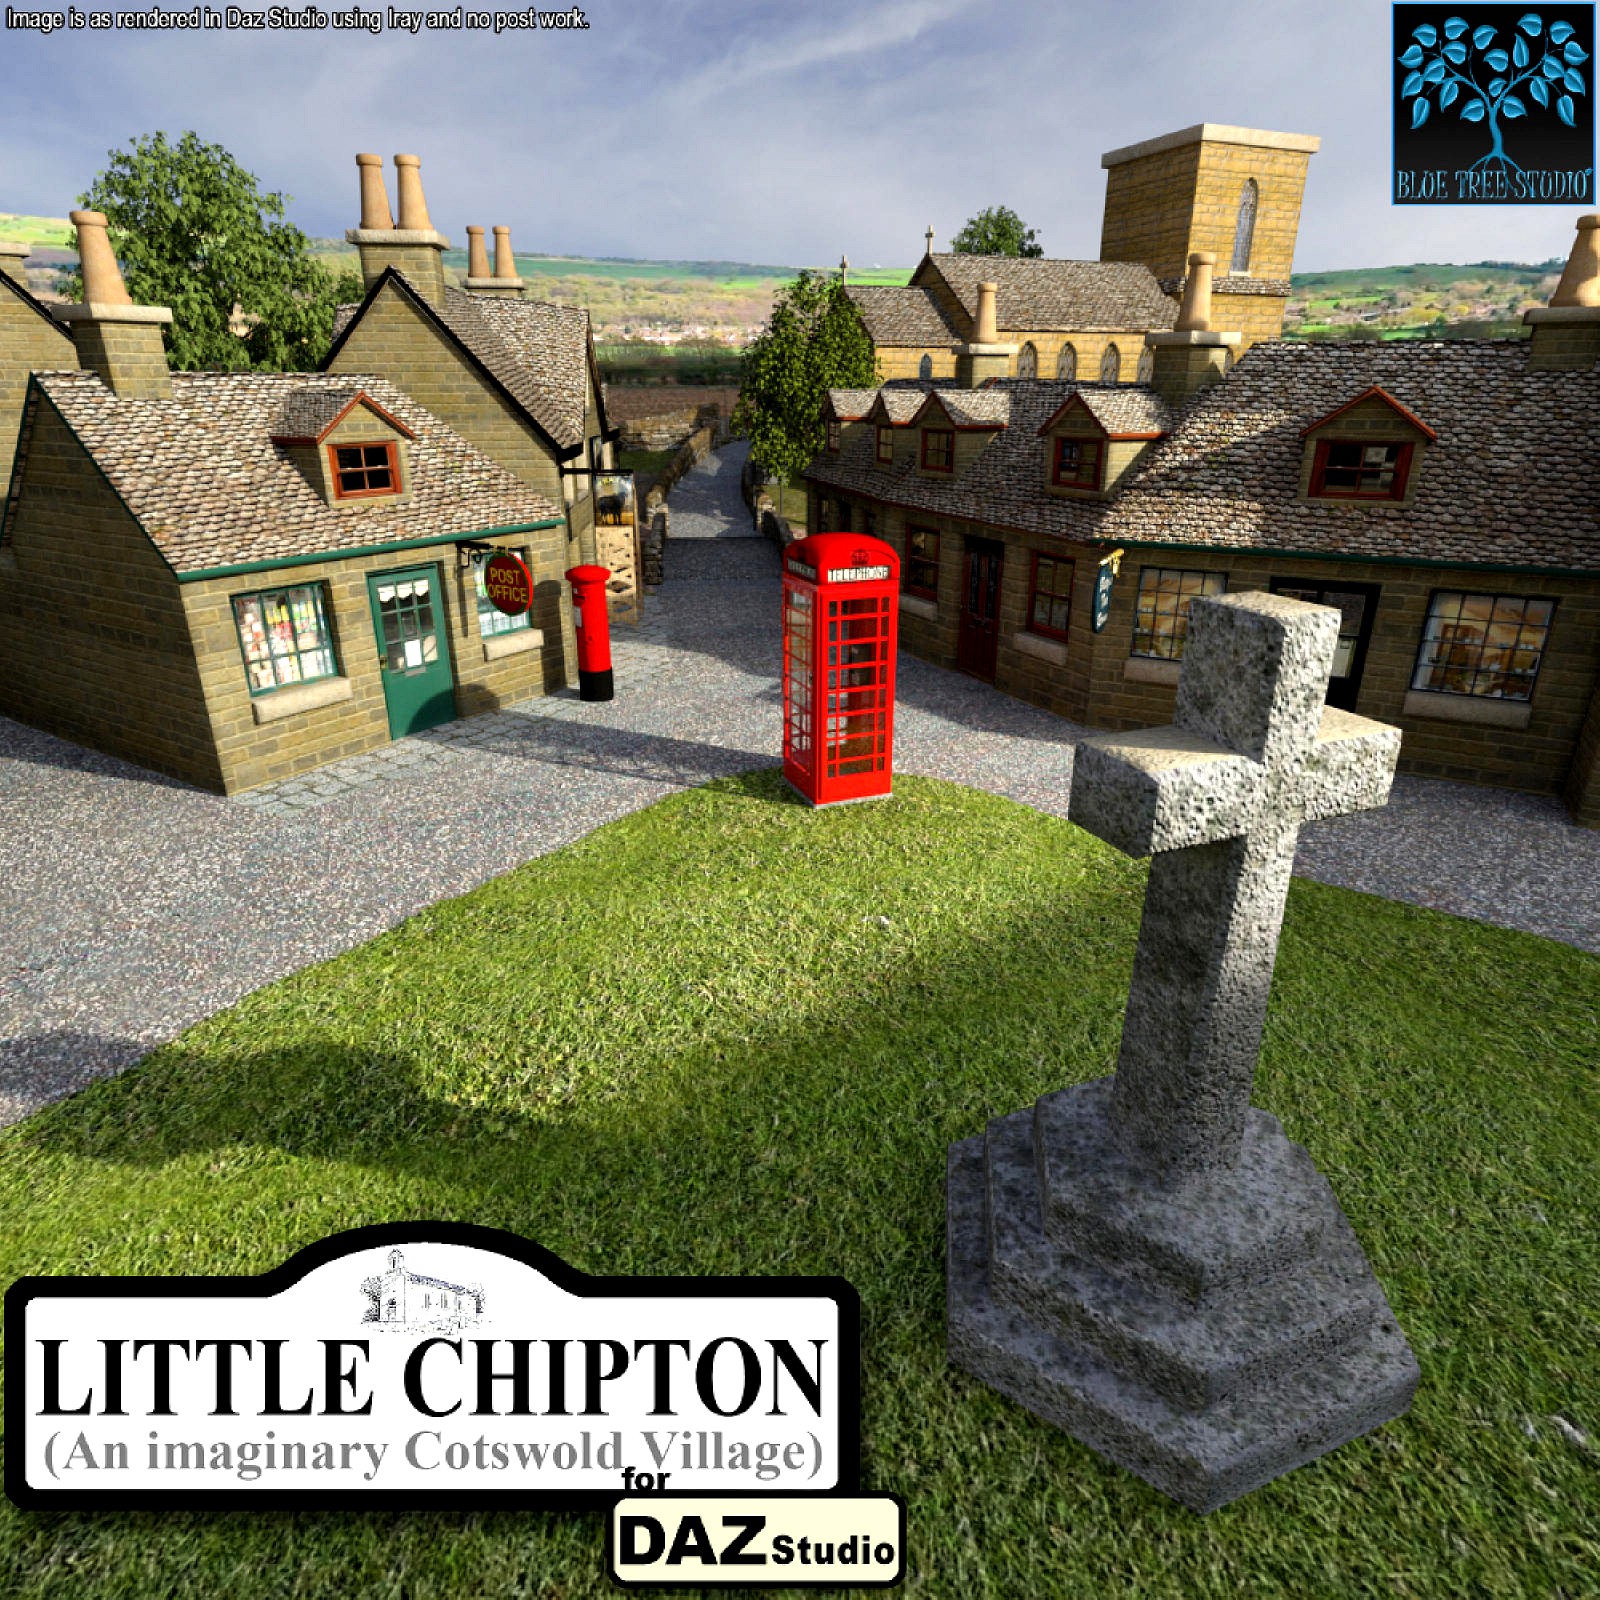 Little Chipton for Daz Studio